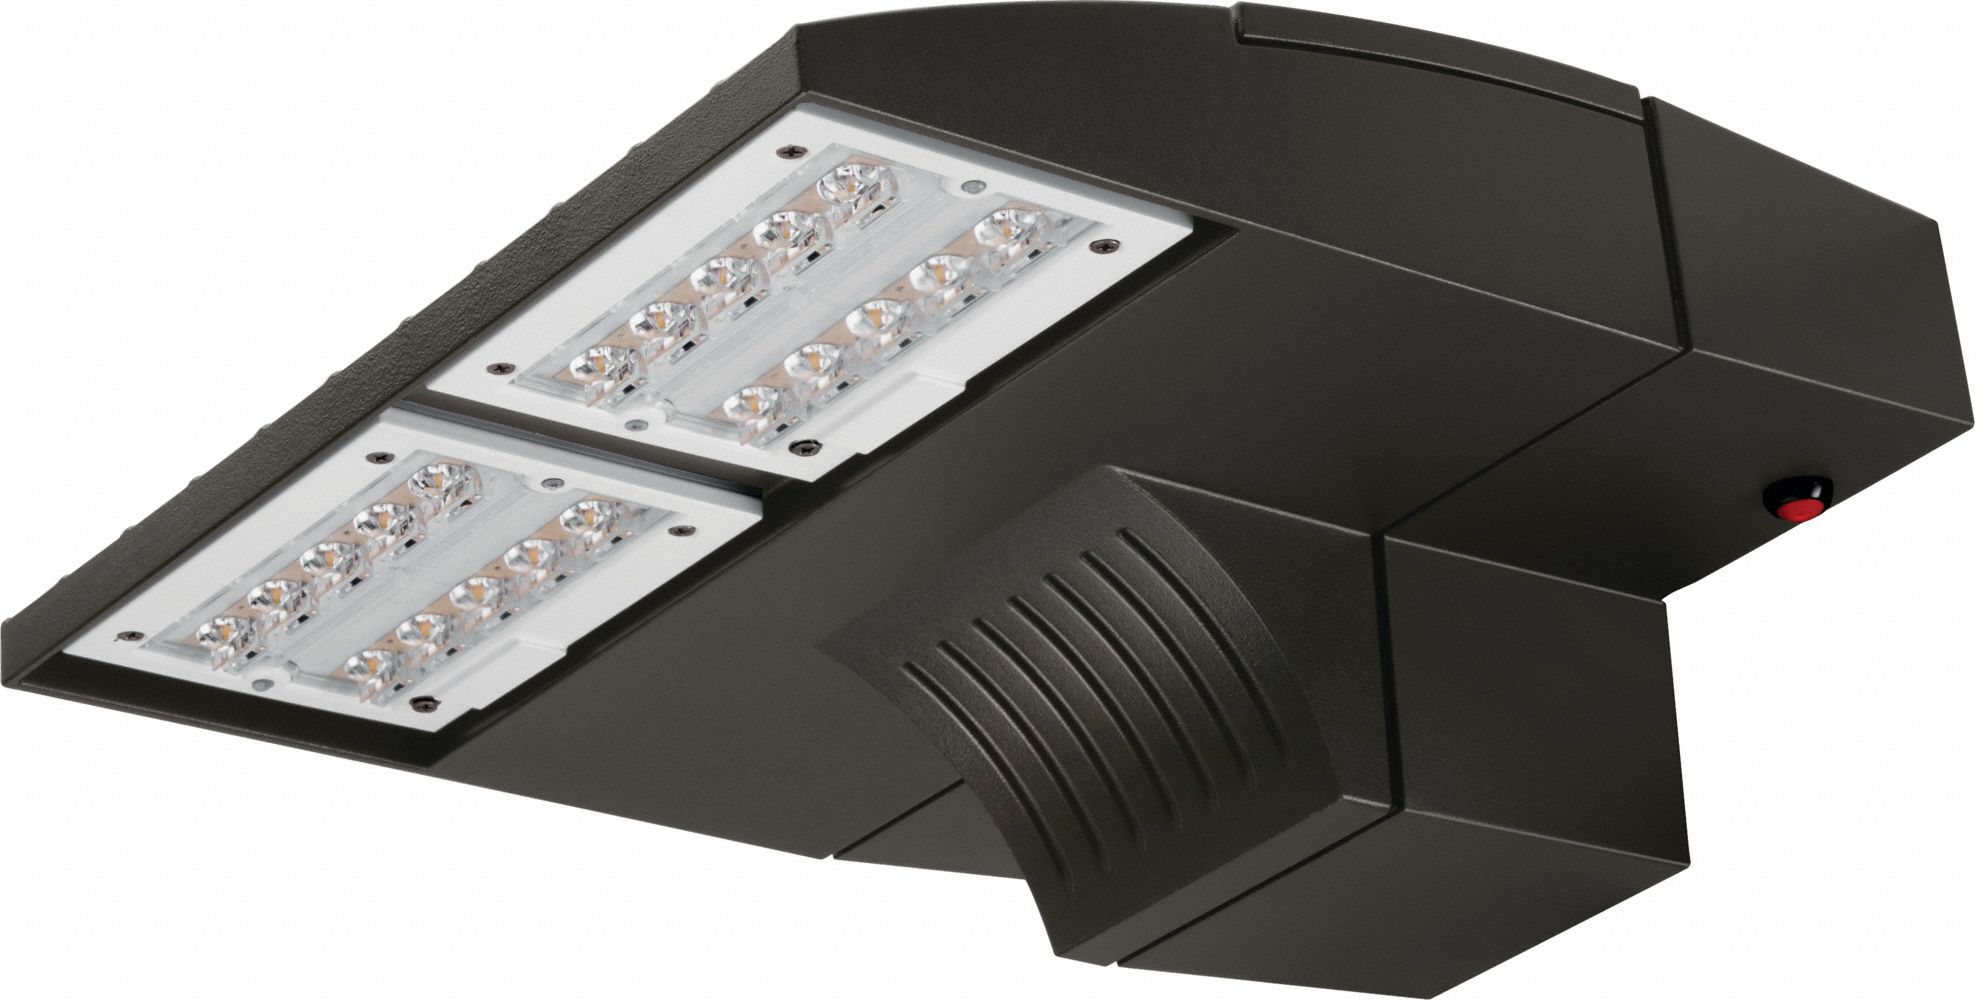 Lithonia Lighting DSXW1 LED Area Light for sale online 